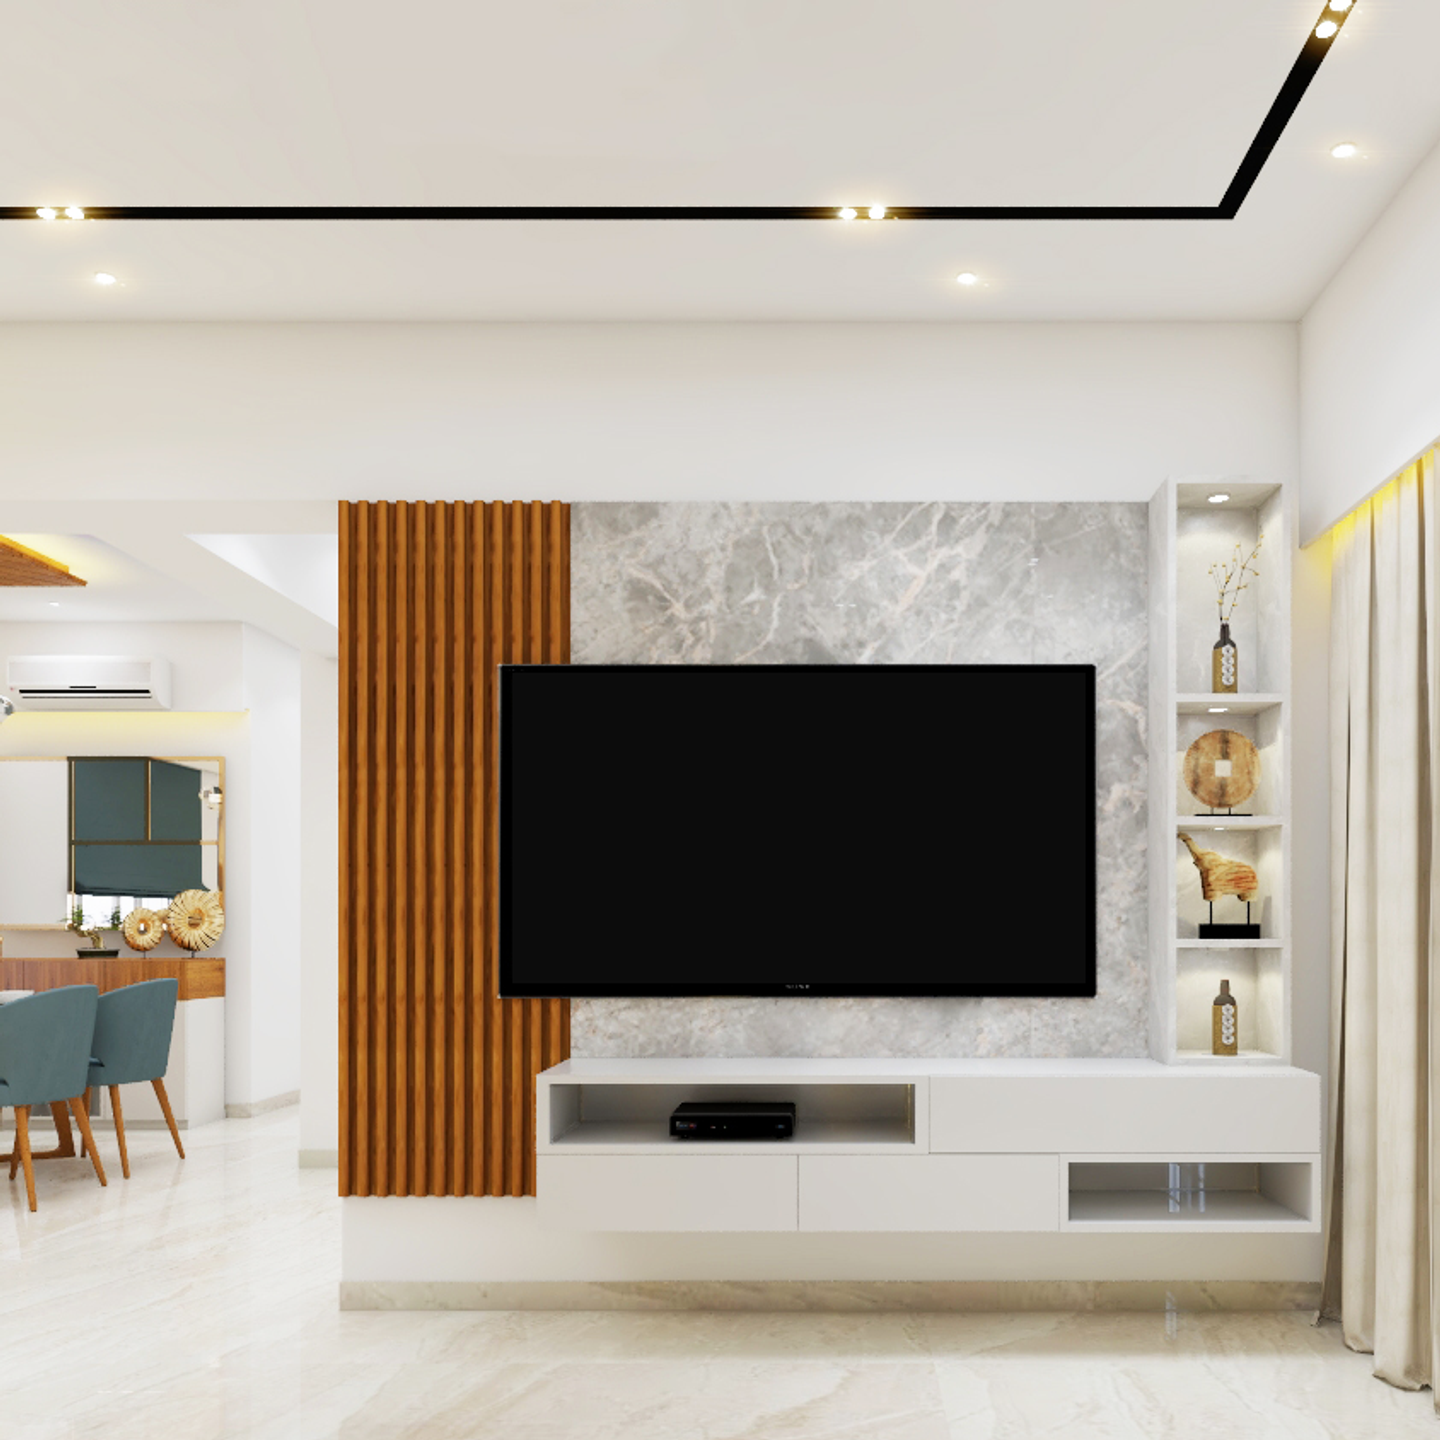 Compact TV Unit Design For Rental Properties - Livspace